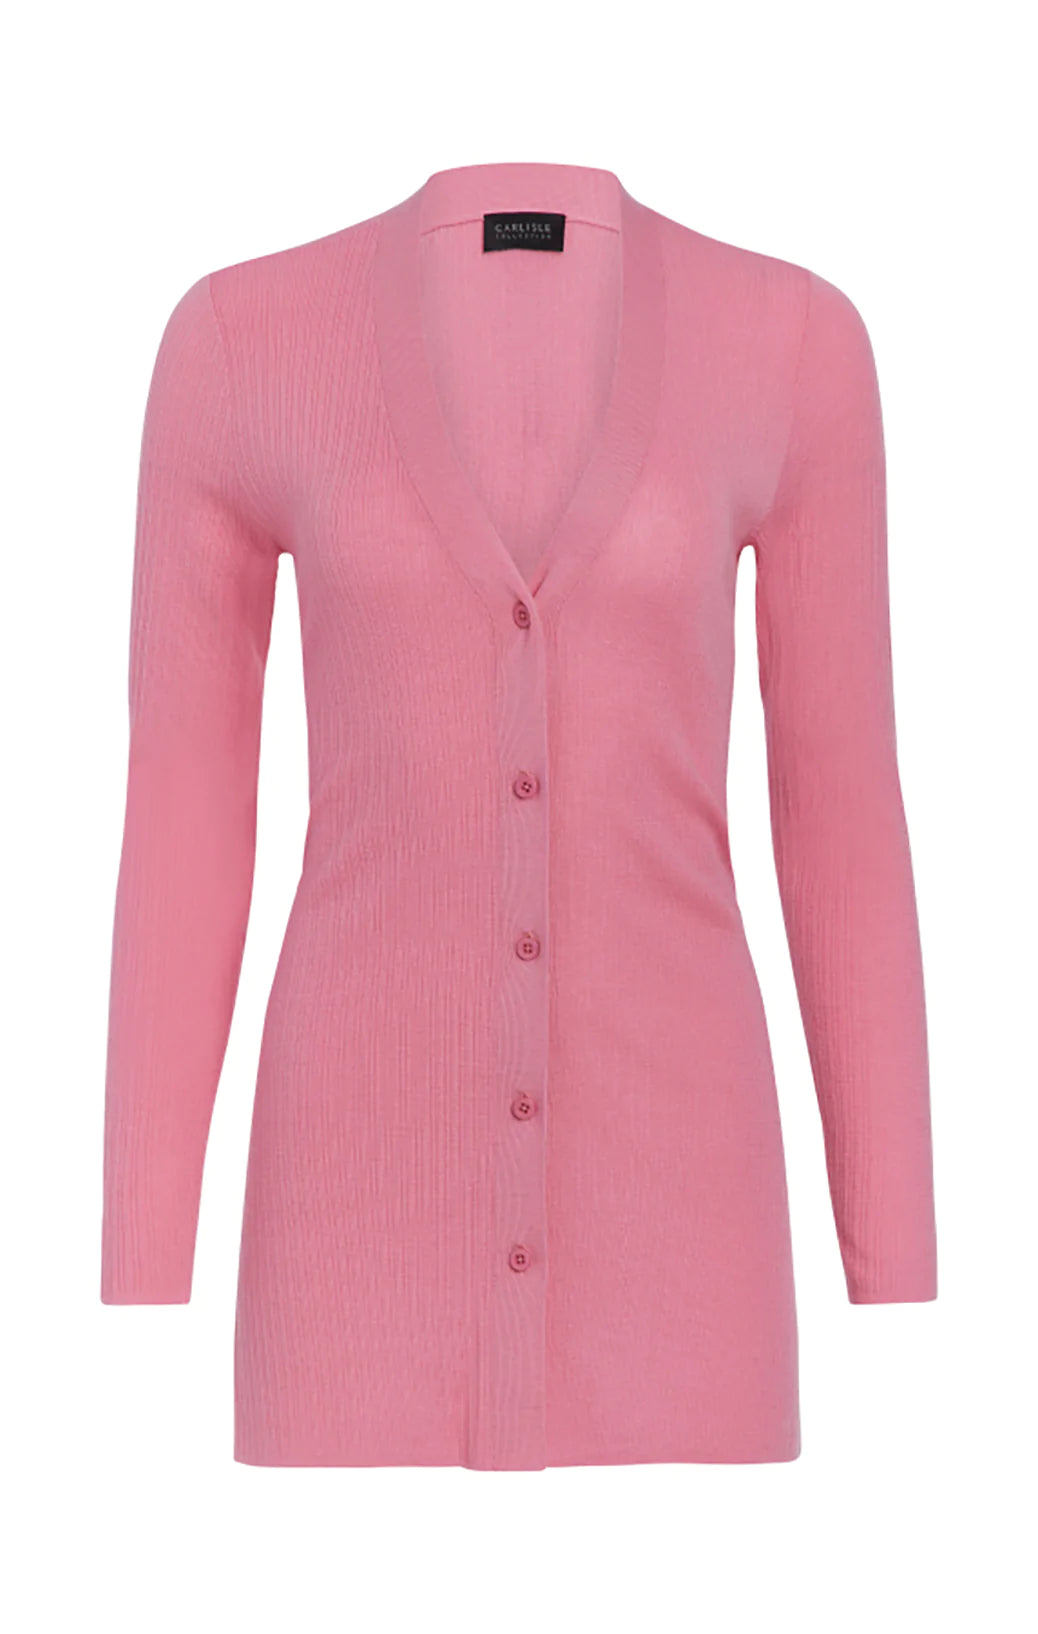 Boscobel-shell - Reversible Pink Cashmere Knit Shell